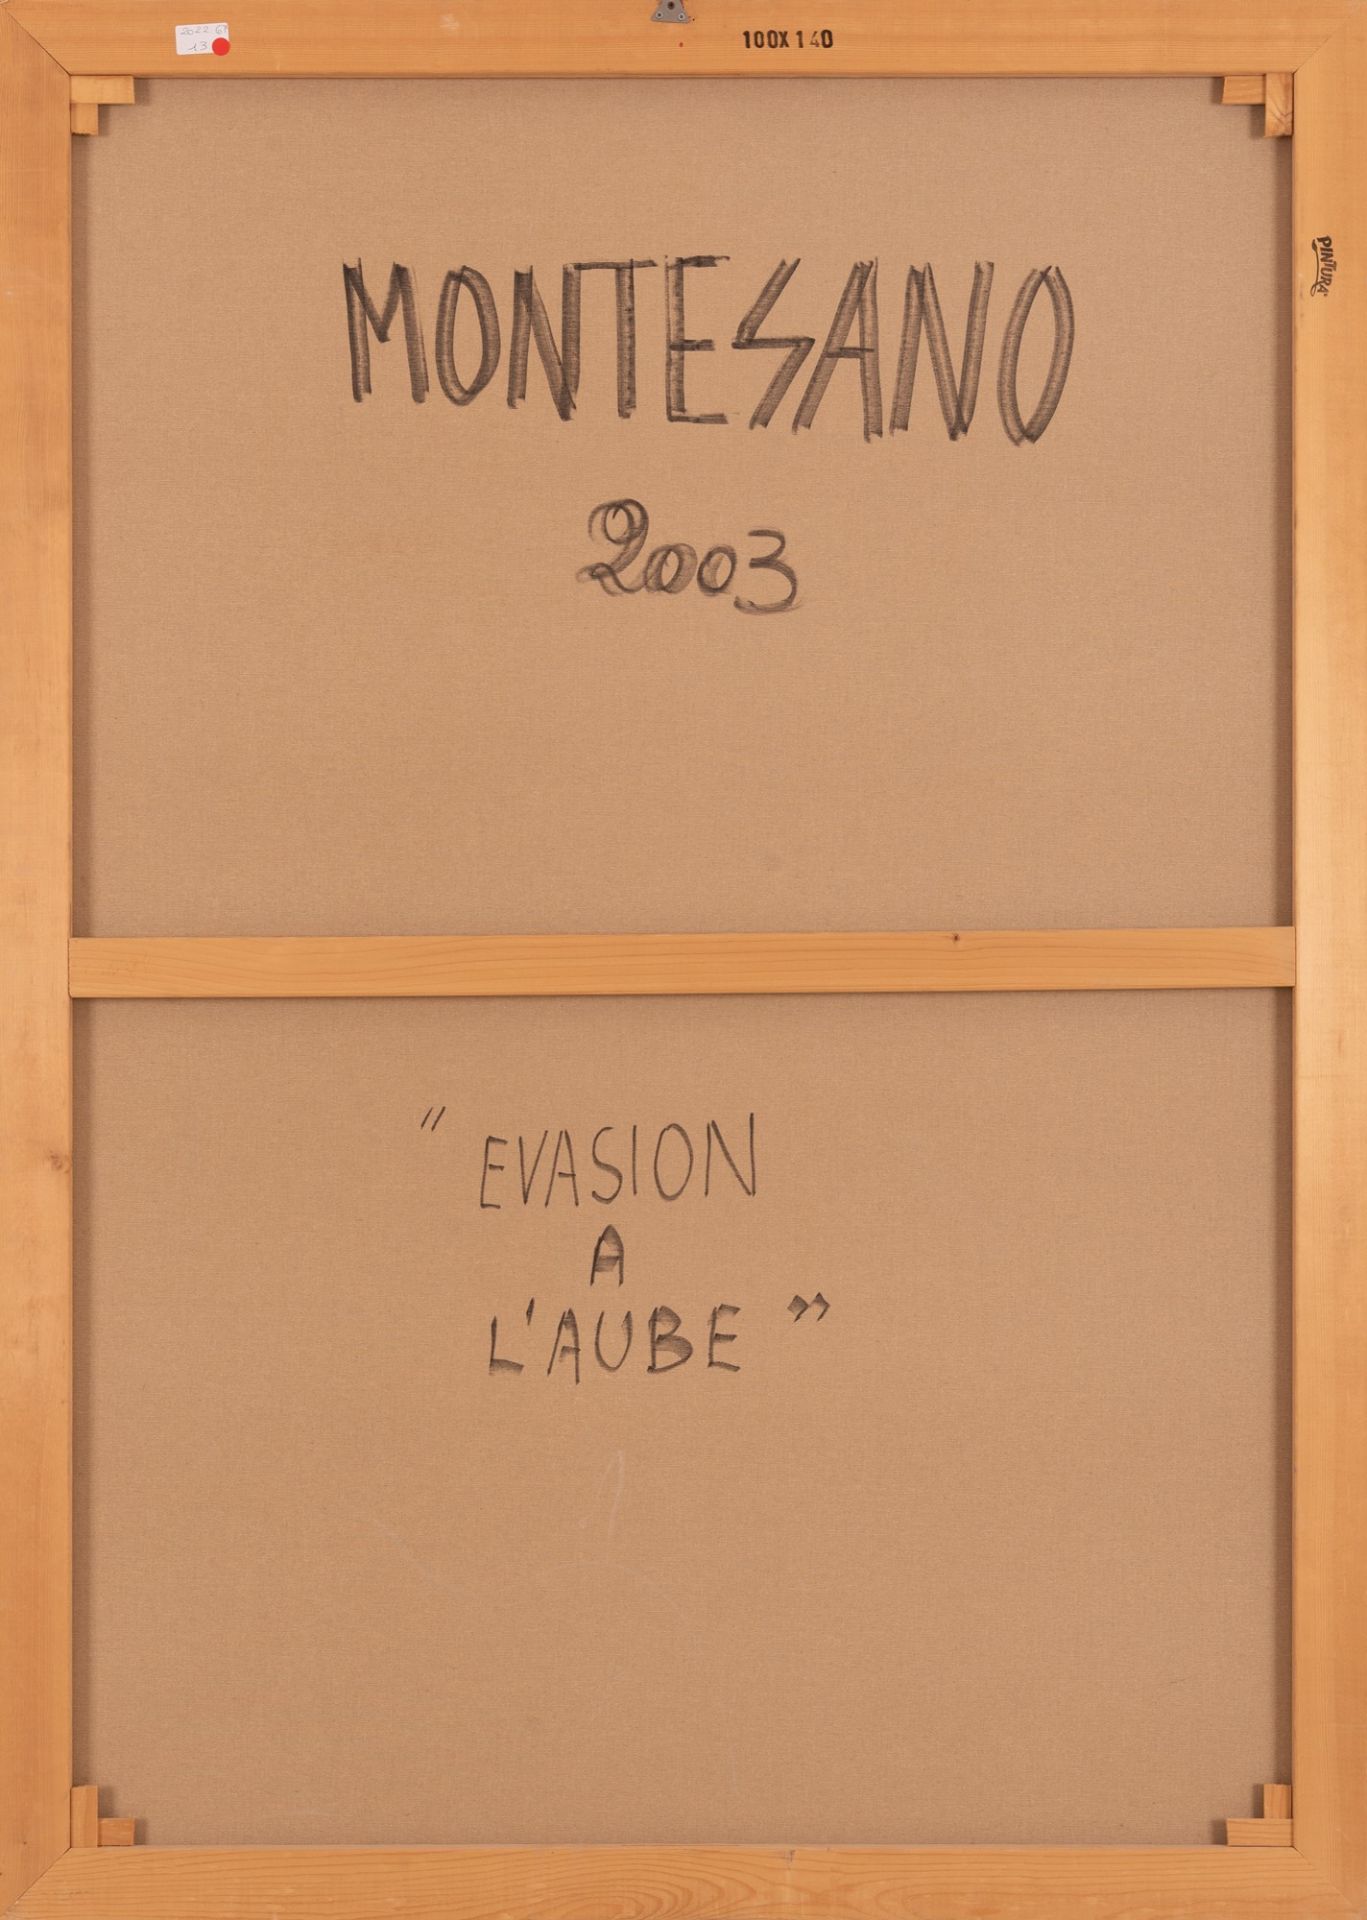 Gian Marco Montesano 
(Torino, 1949 - ) 
Evasion a Laube 
2003 - Image 2 of 2